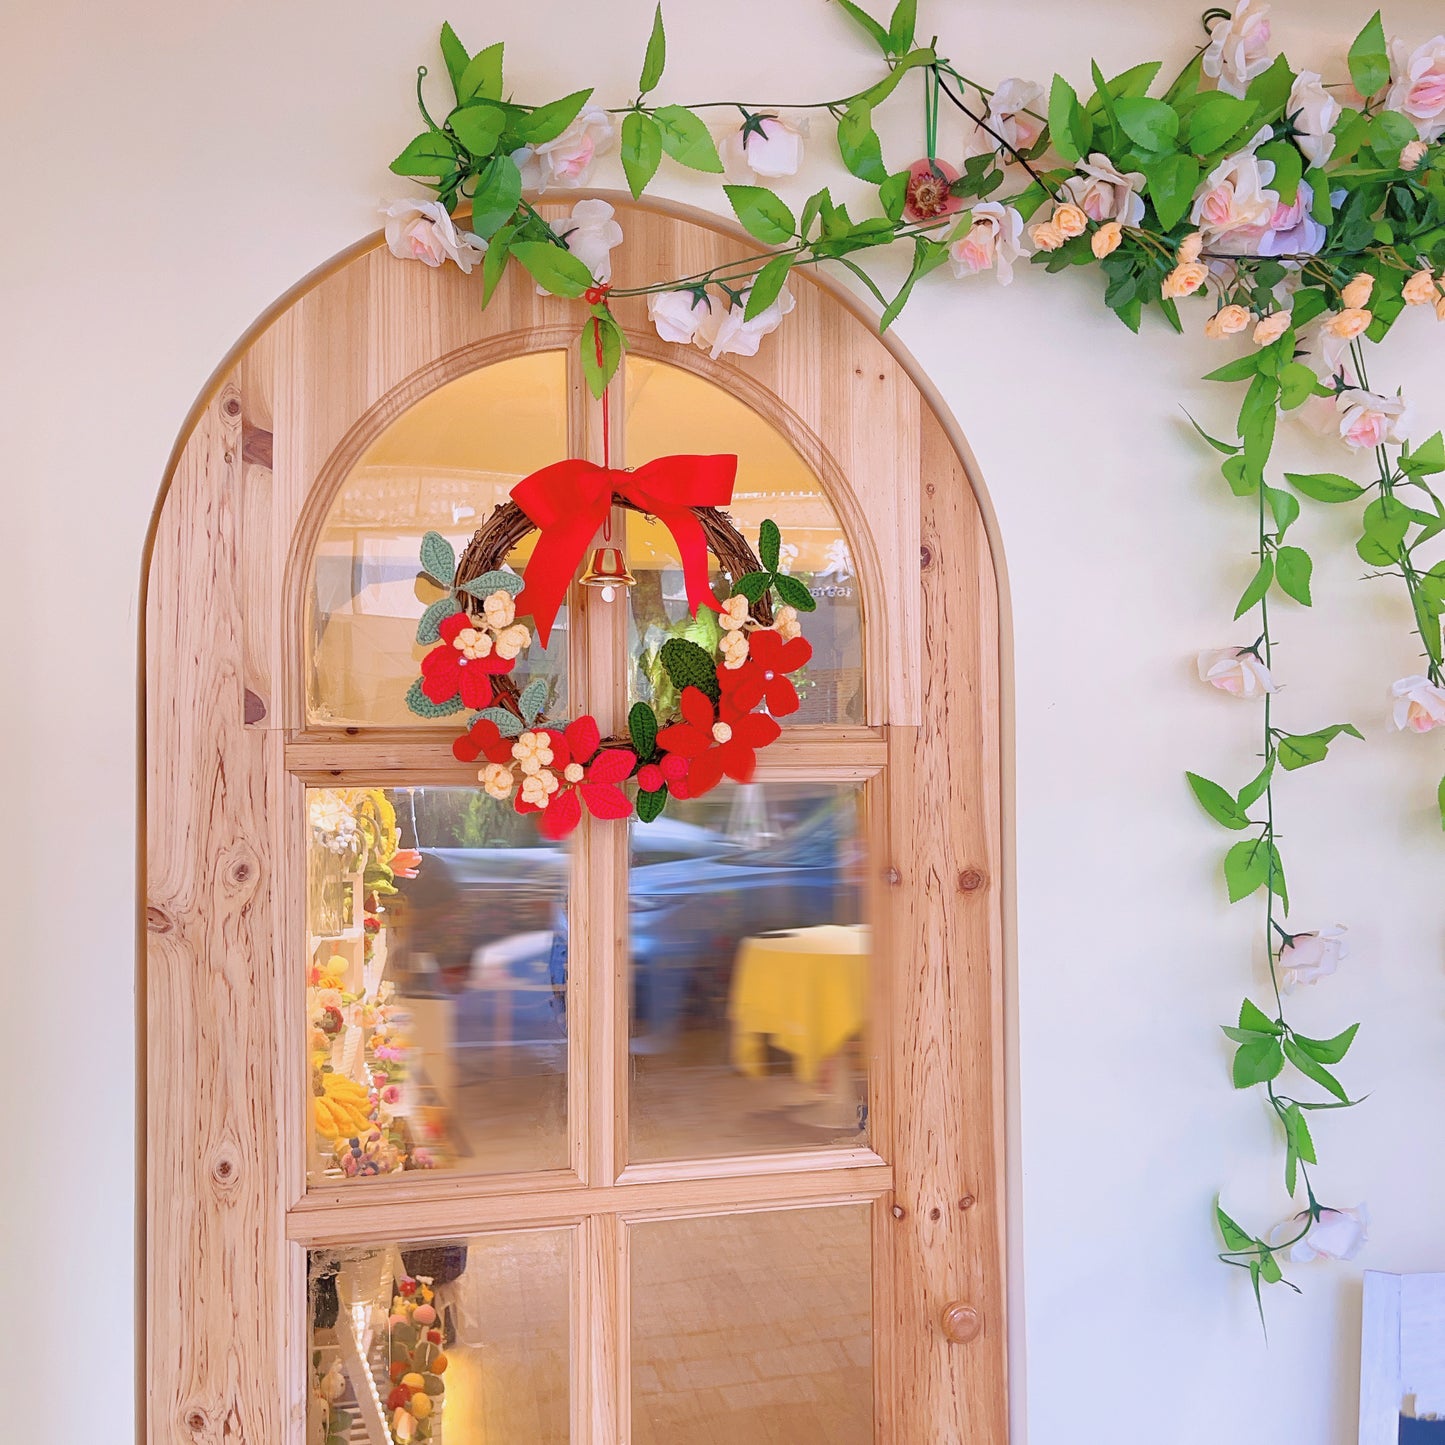 Festive Crochet Poinsettia Garland Wreath for Christmas Decorations - Door Decoration, Christmas Centerpiece